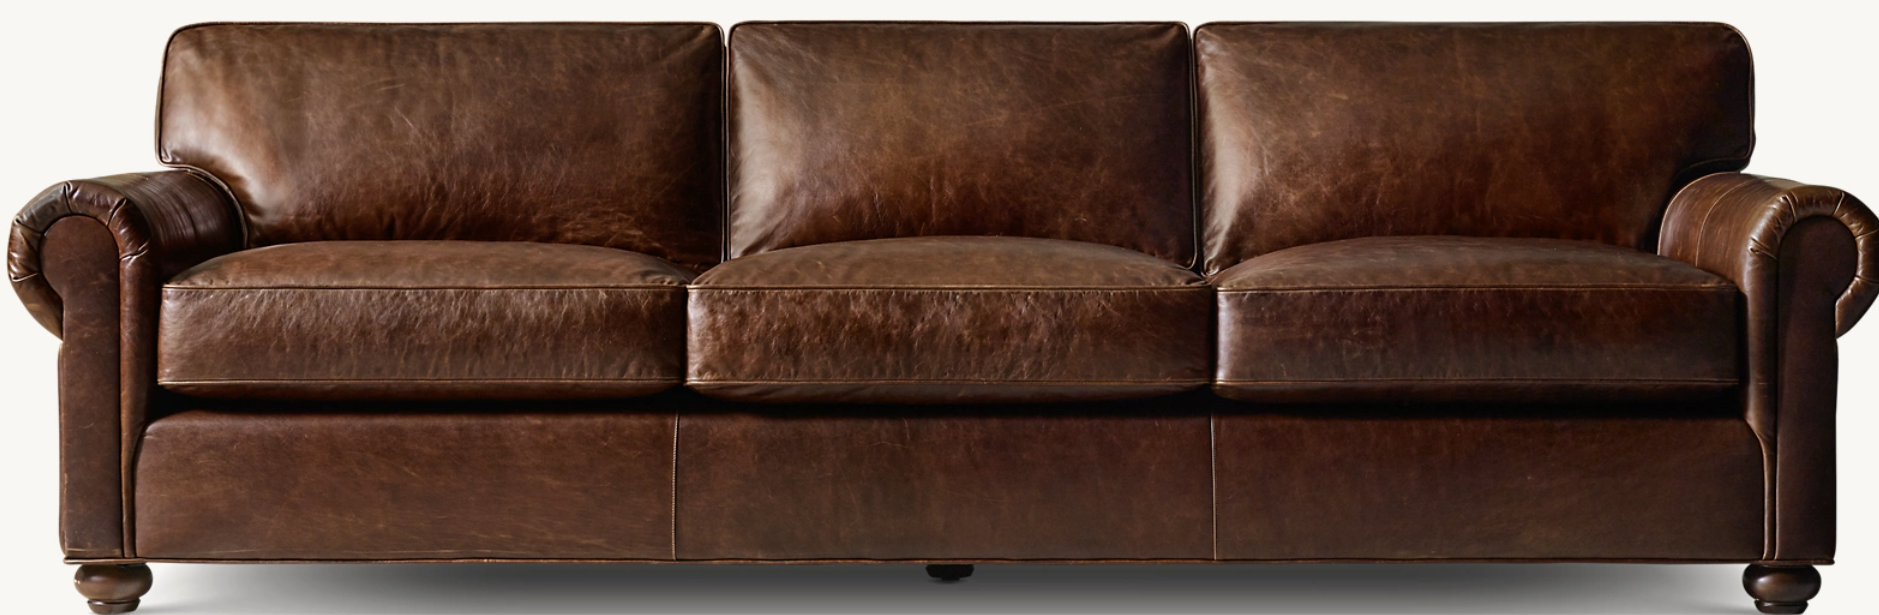 lancaster-rh-sofa